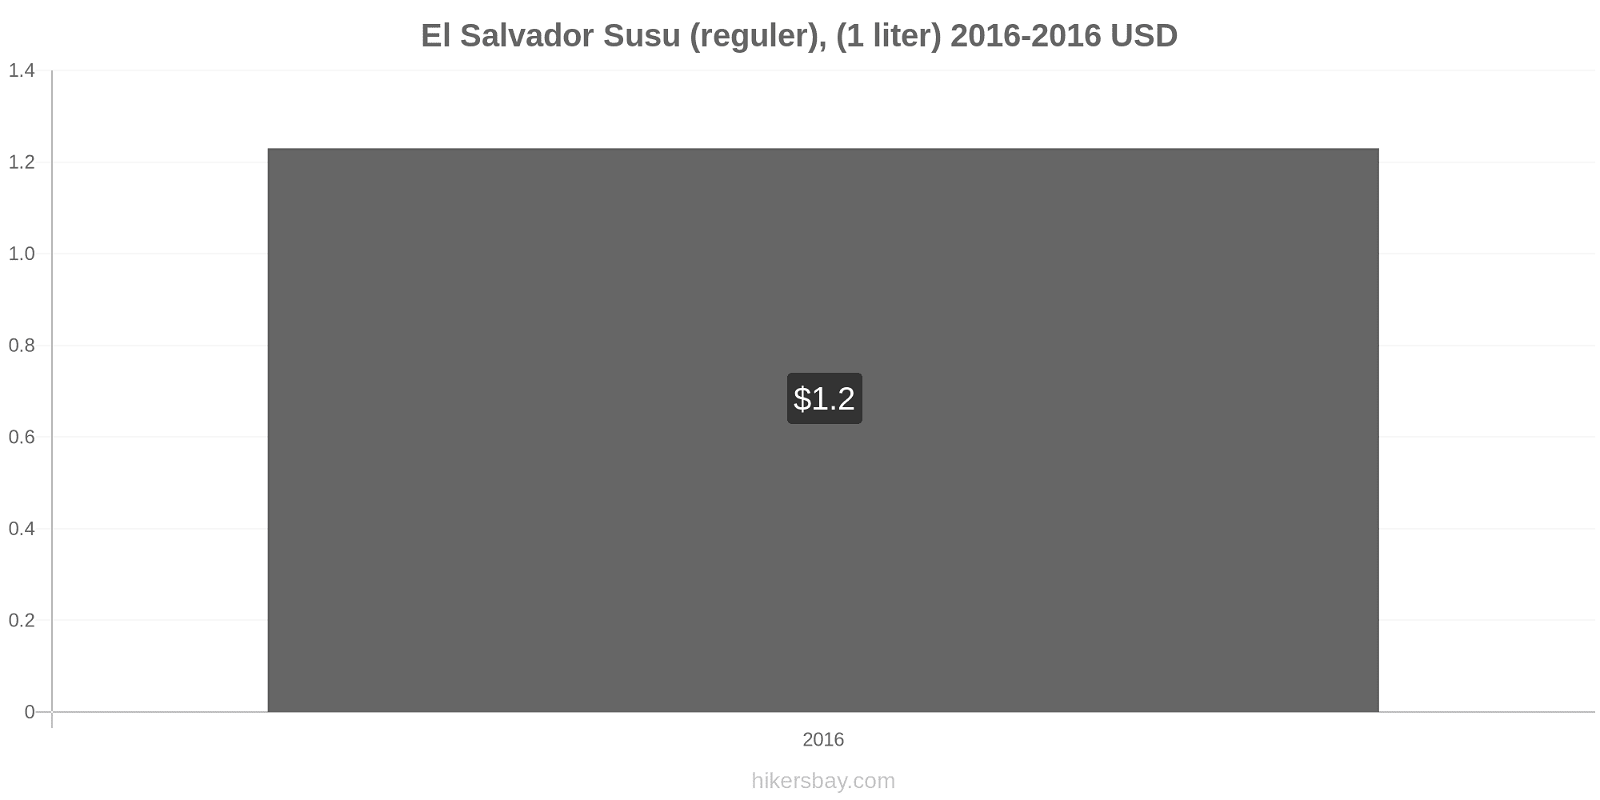 El Salvador perubahan harga Susu (reguler), (1 liter) hikersbay.com